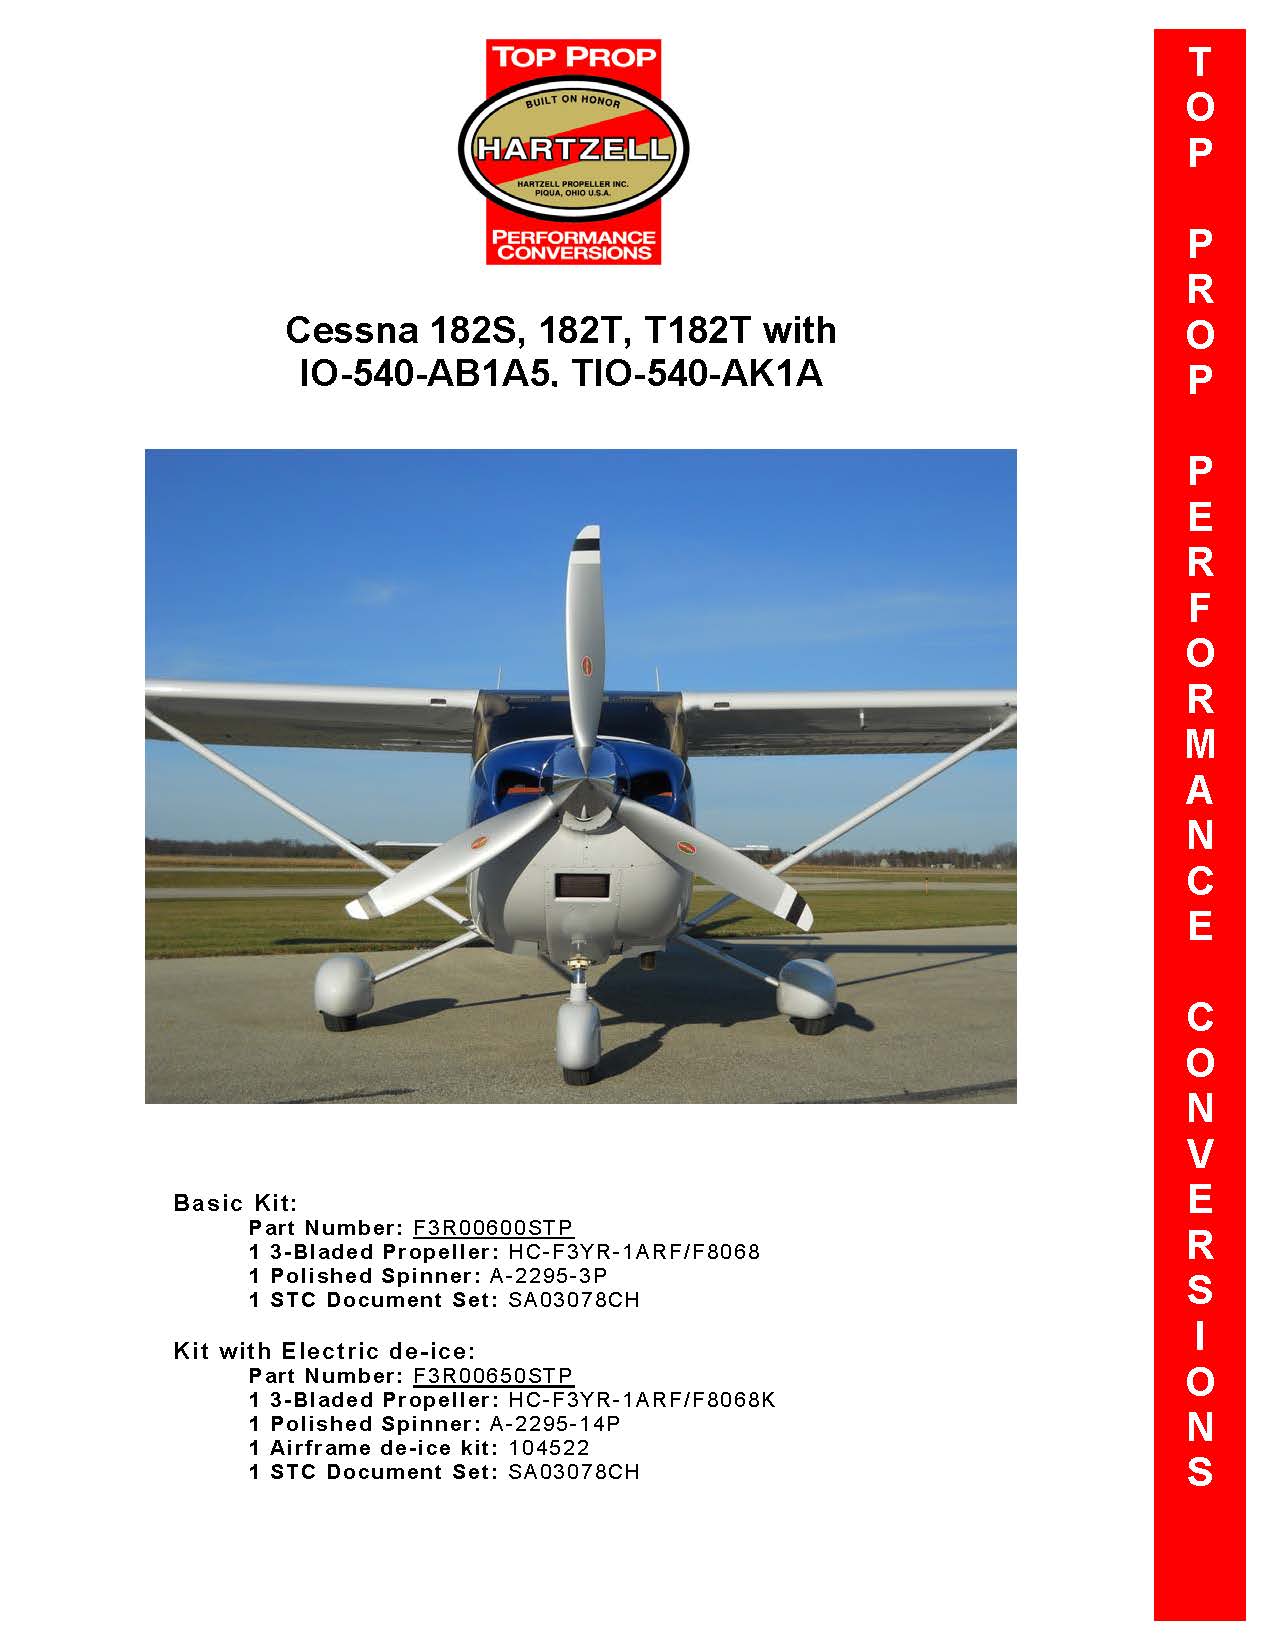 CESSNA-182S-T-T182T-F3R00600STP-PAGE-1